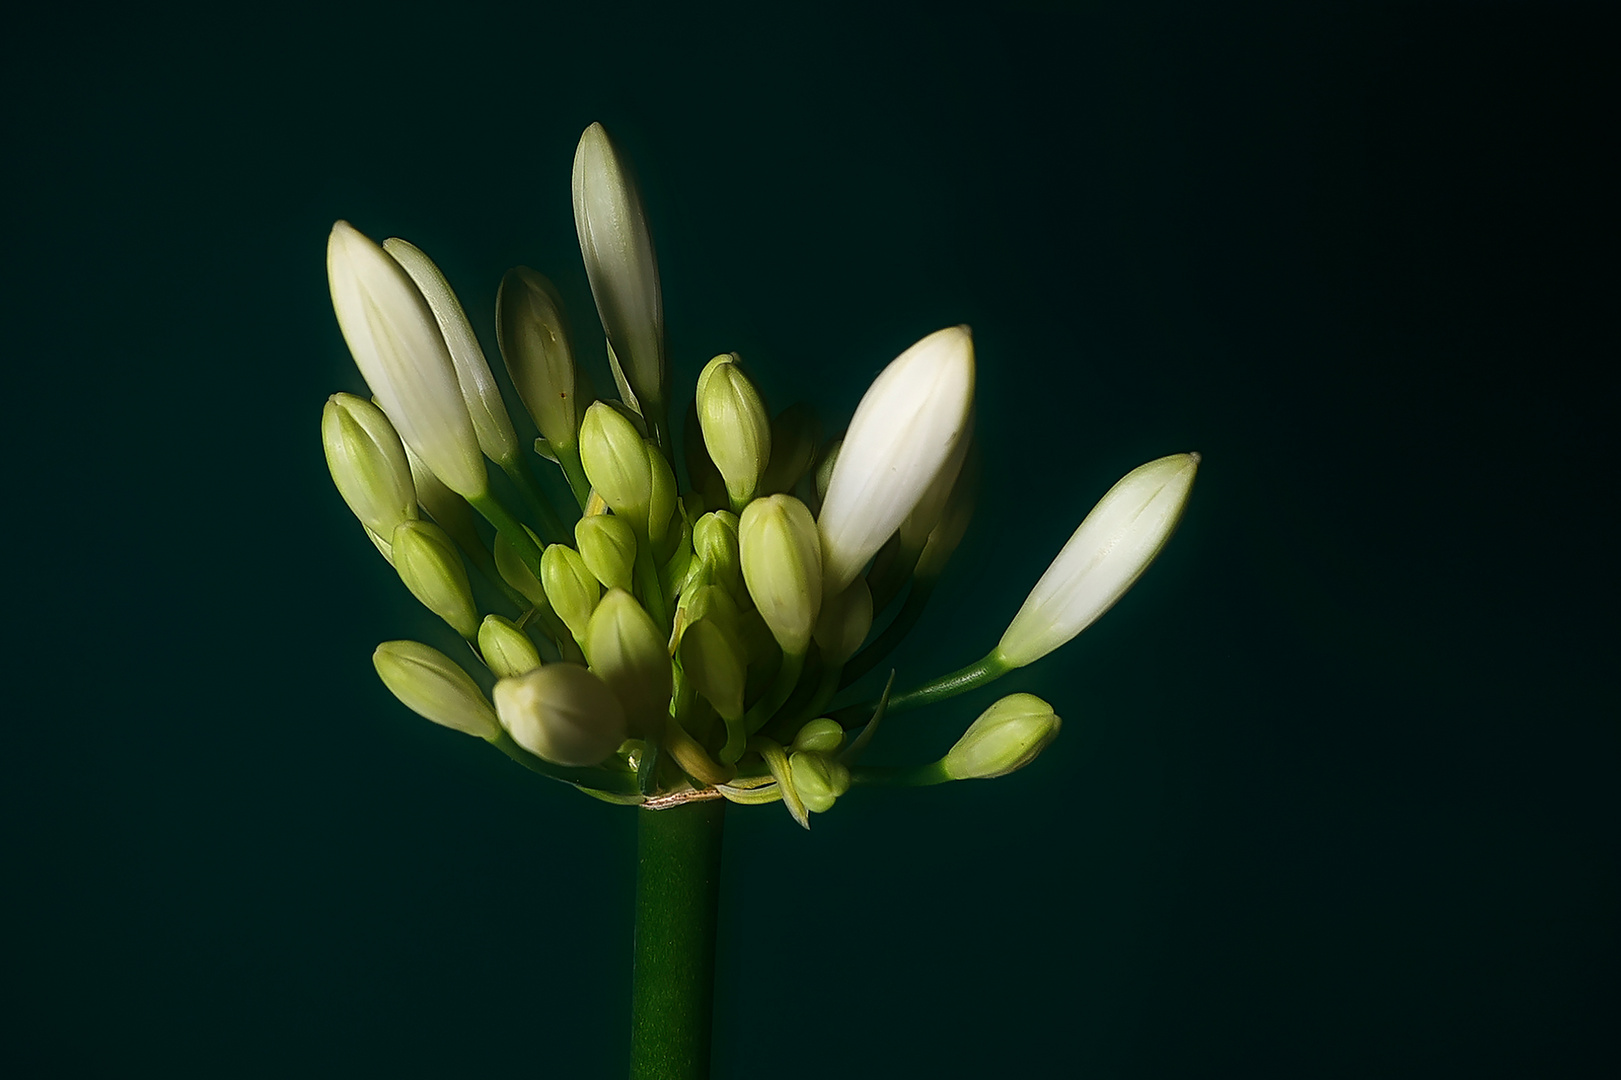 Agapanthus Blühten zu fc - Kopie - Kopie